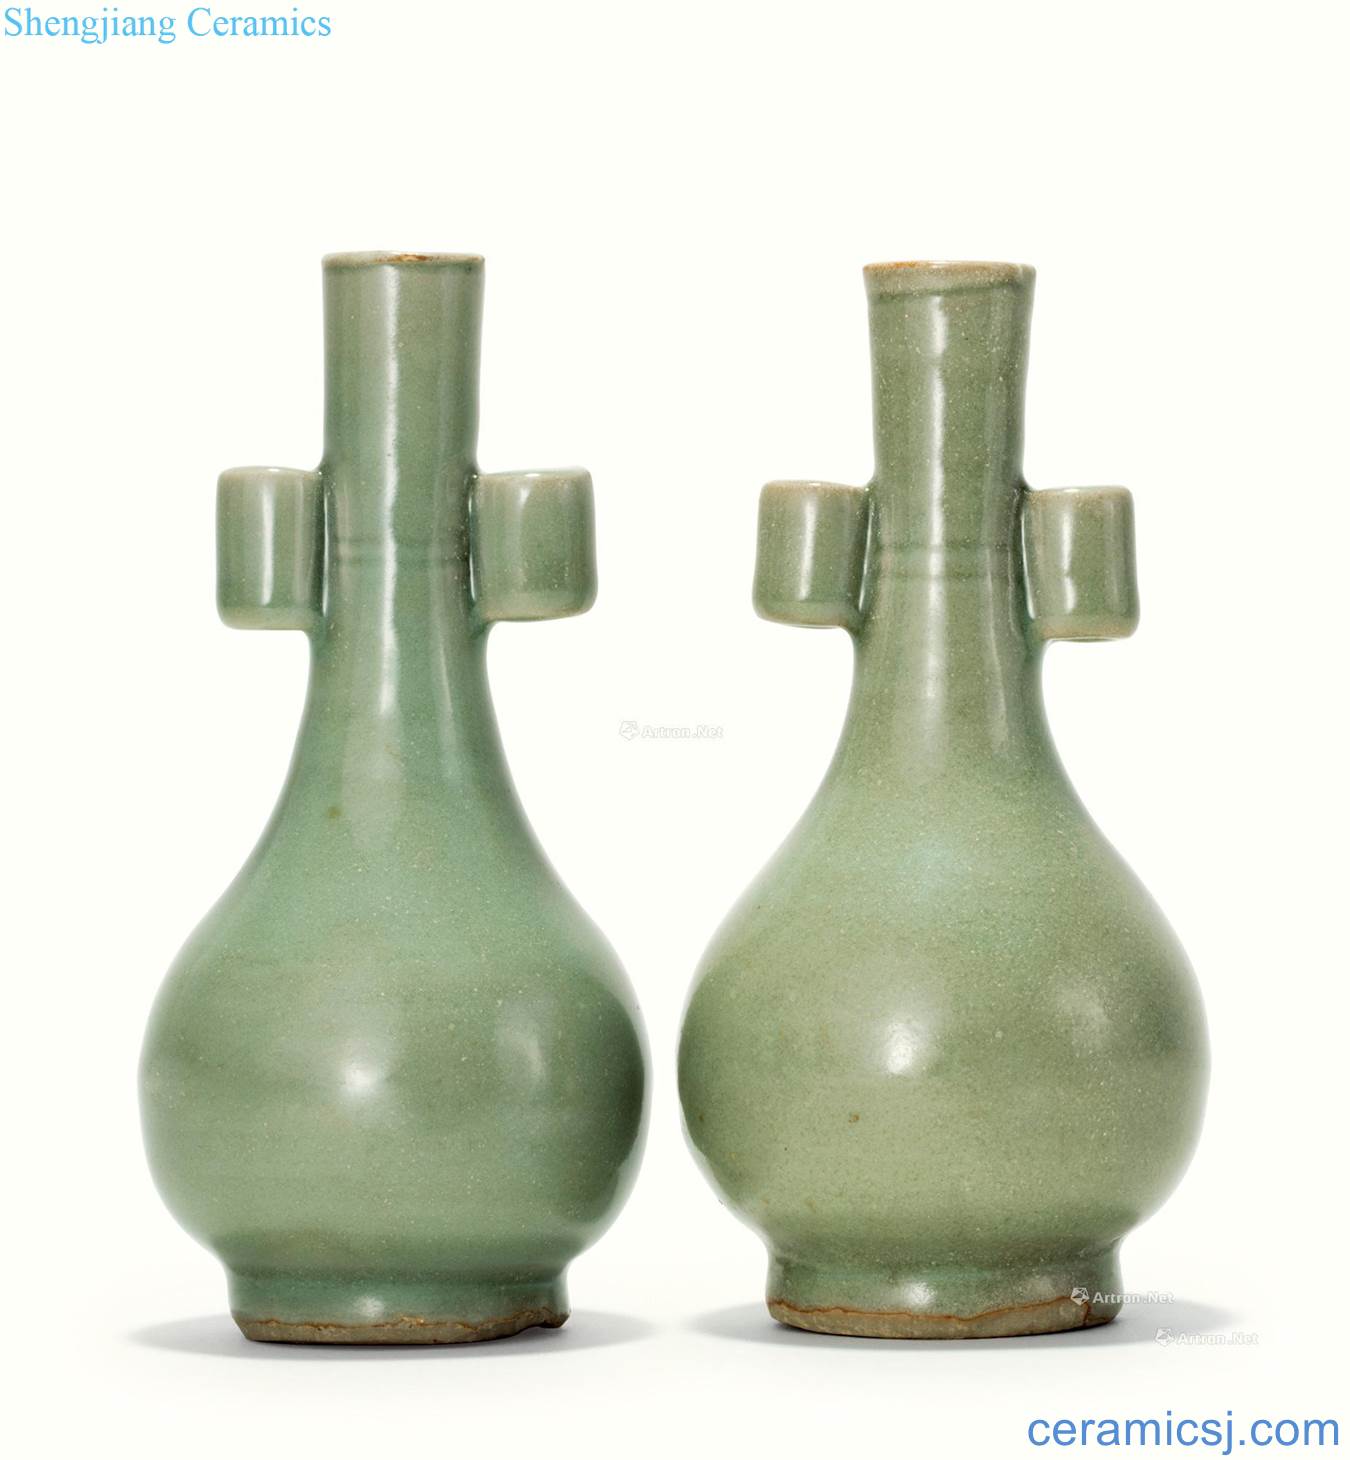 The yuan dynasty Longquan green glaze penetration ears (a)